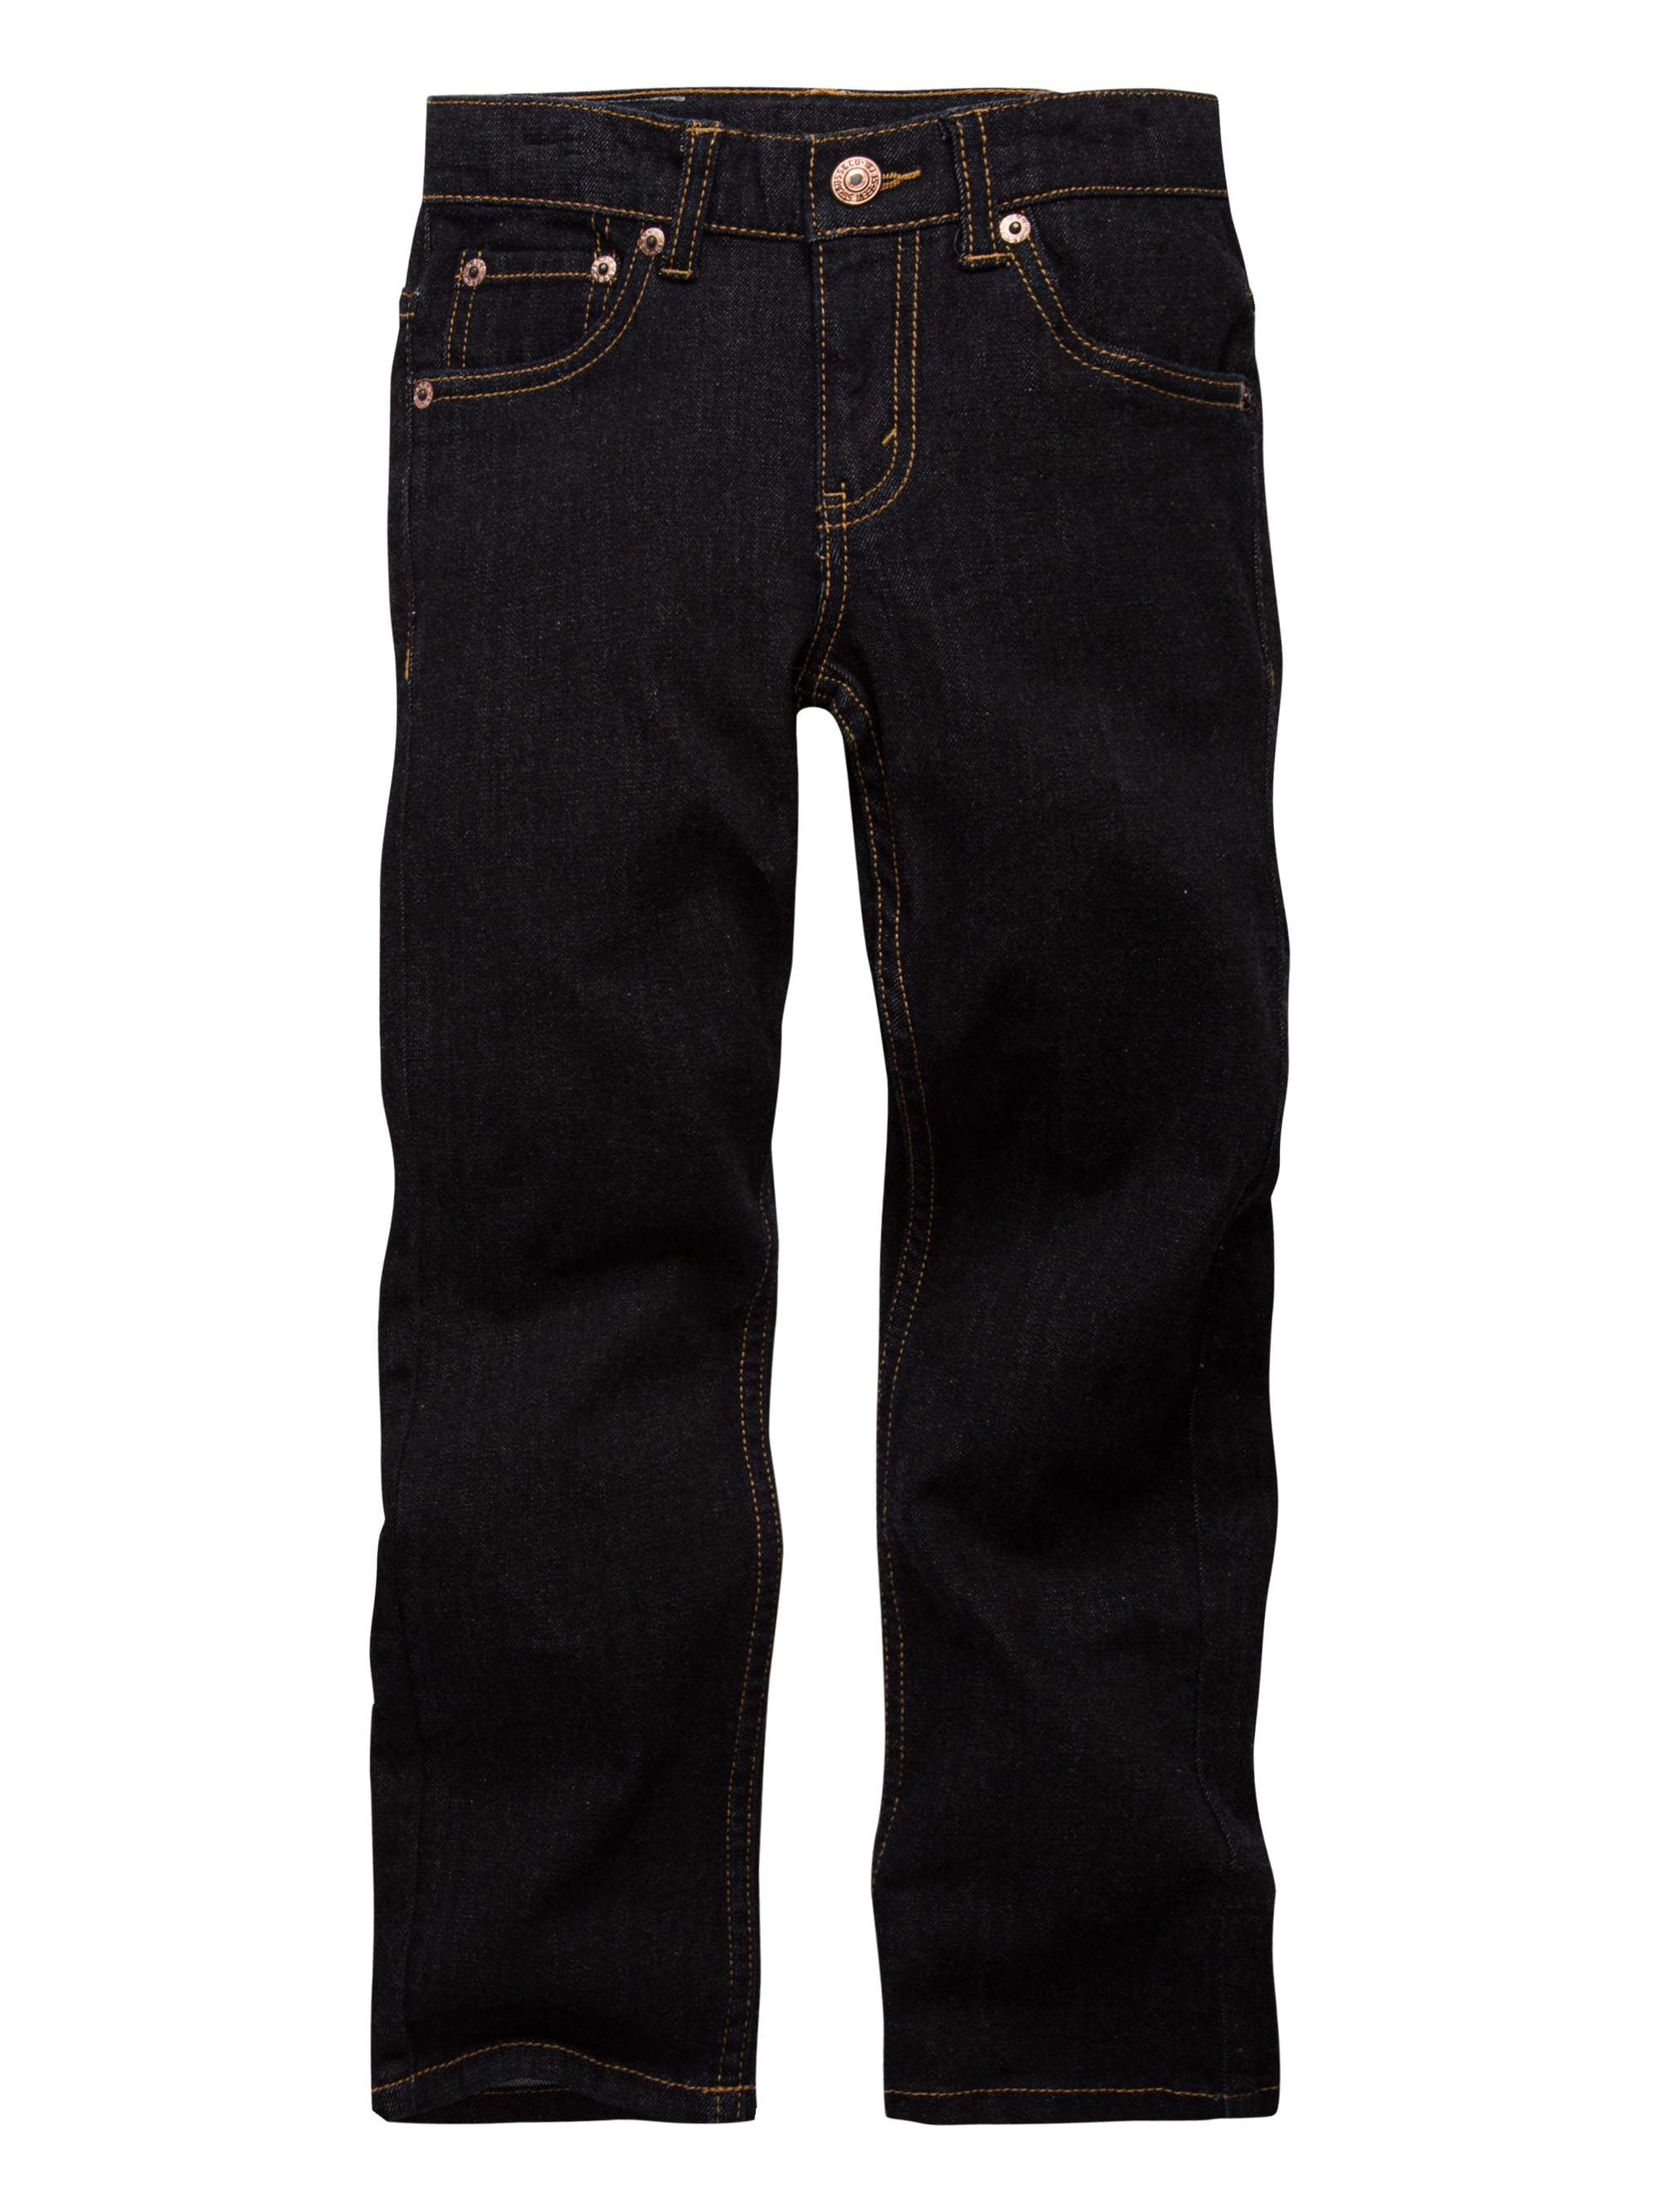 Levi's Boys 510 Skinny Fit Jeans, Sizes 